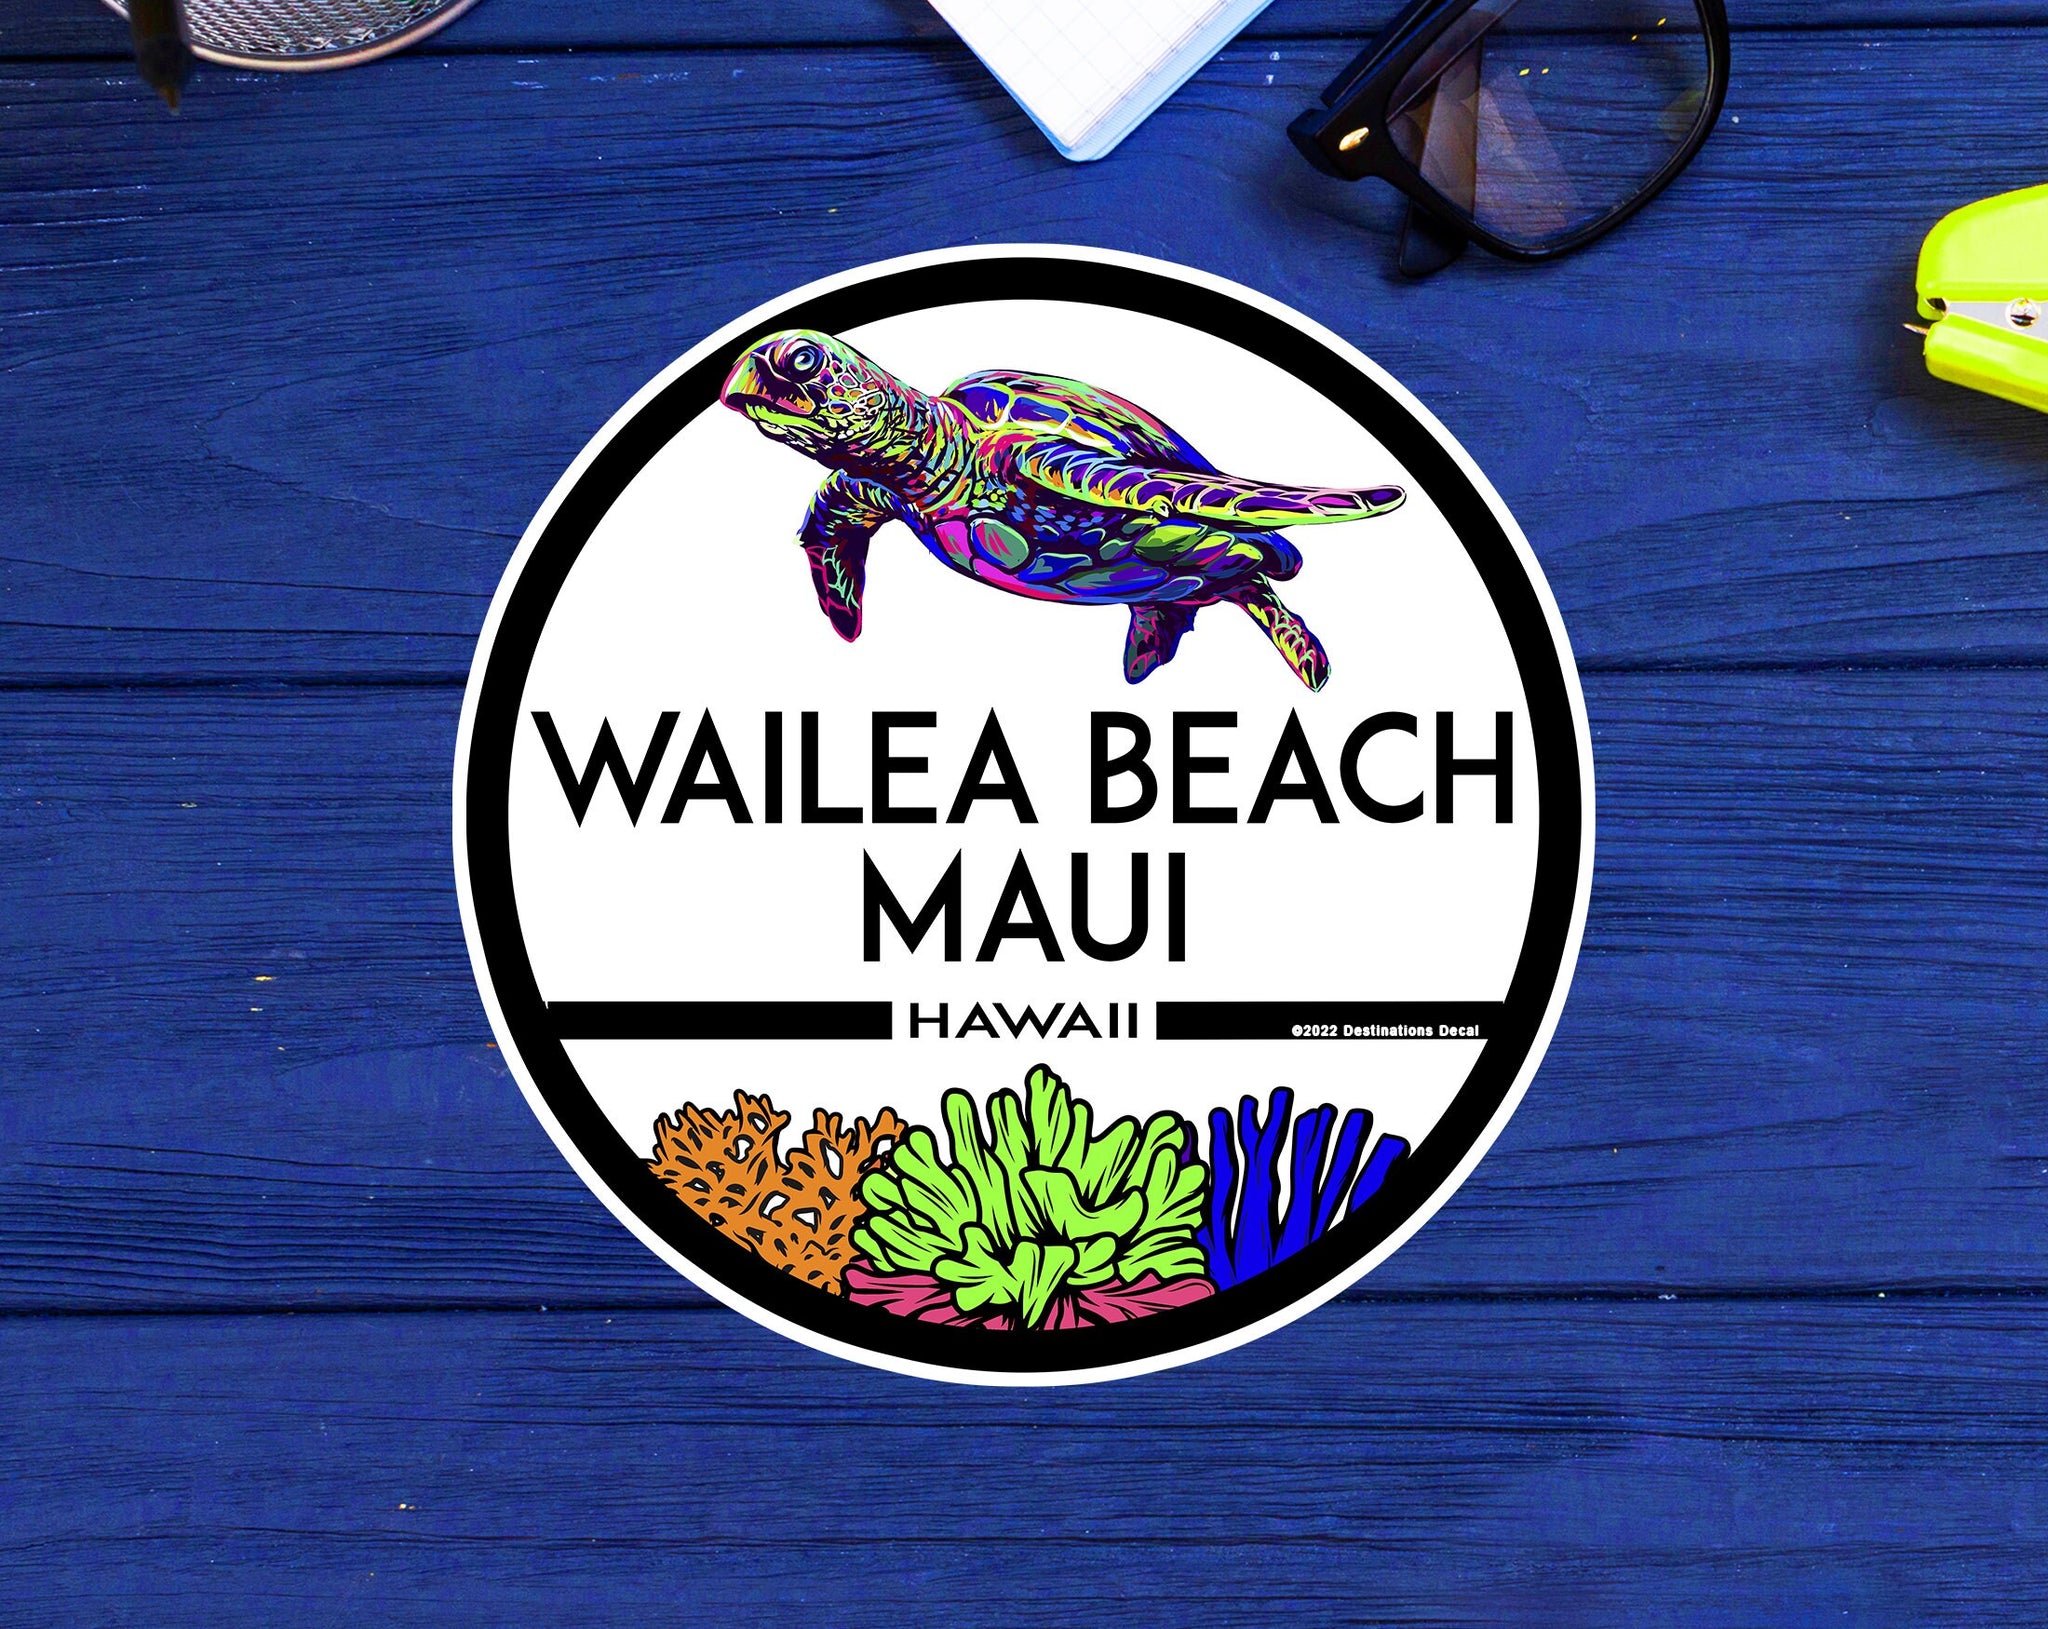 Wailea Beach Maui Sticker Decal Hawaii Beach Ocean Sea Turtle 3"